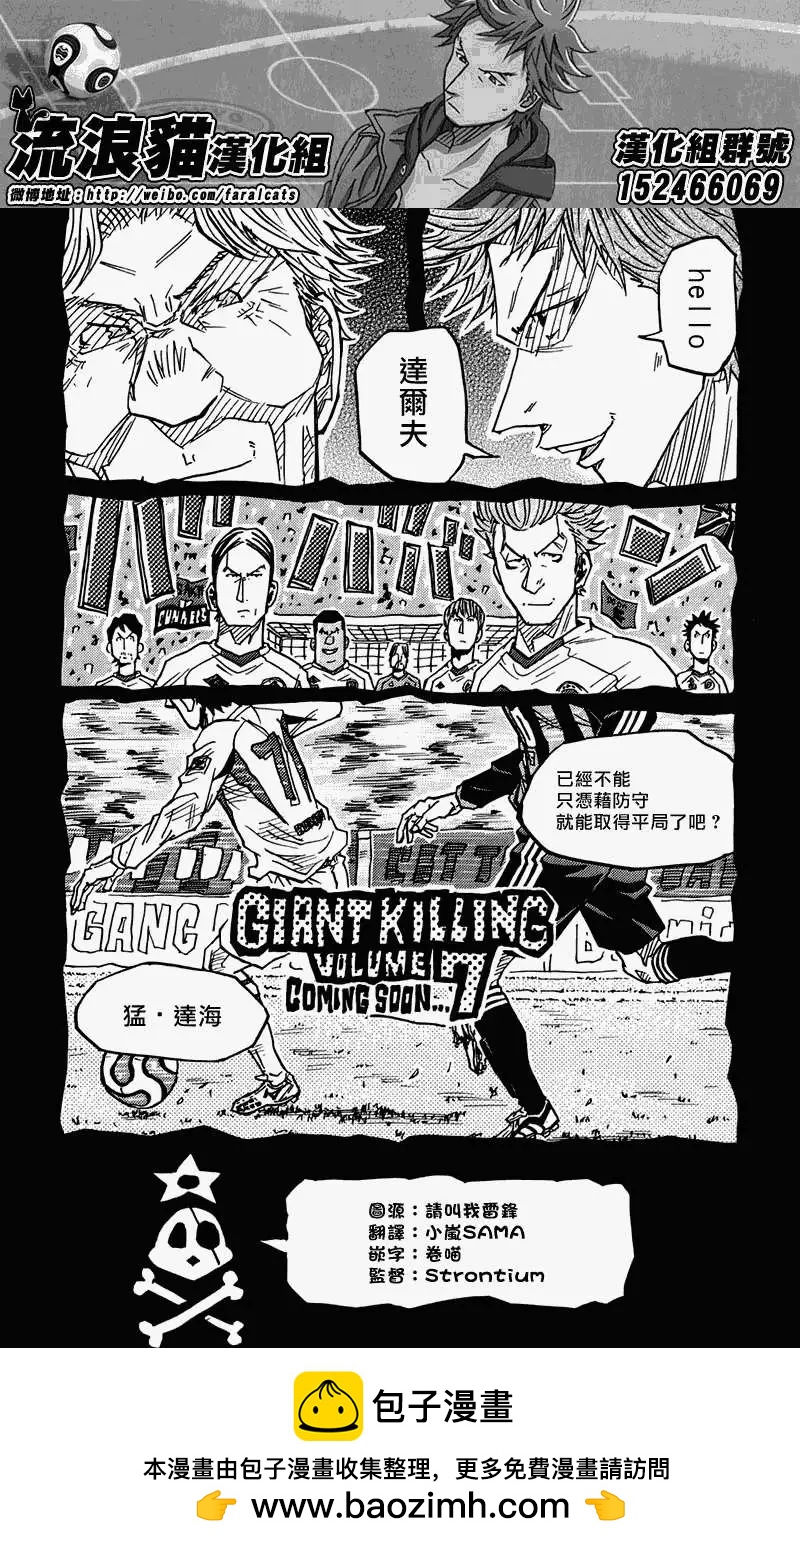 逆轉監督GIANT KILLING - 第57回(補) - 2